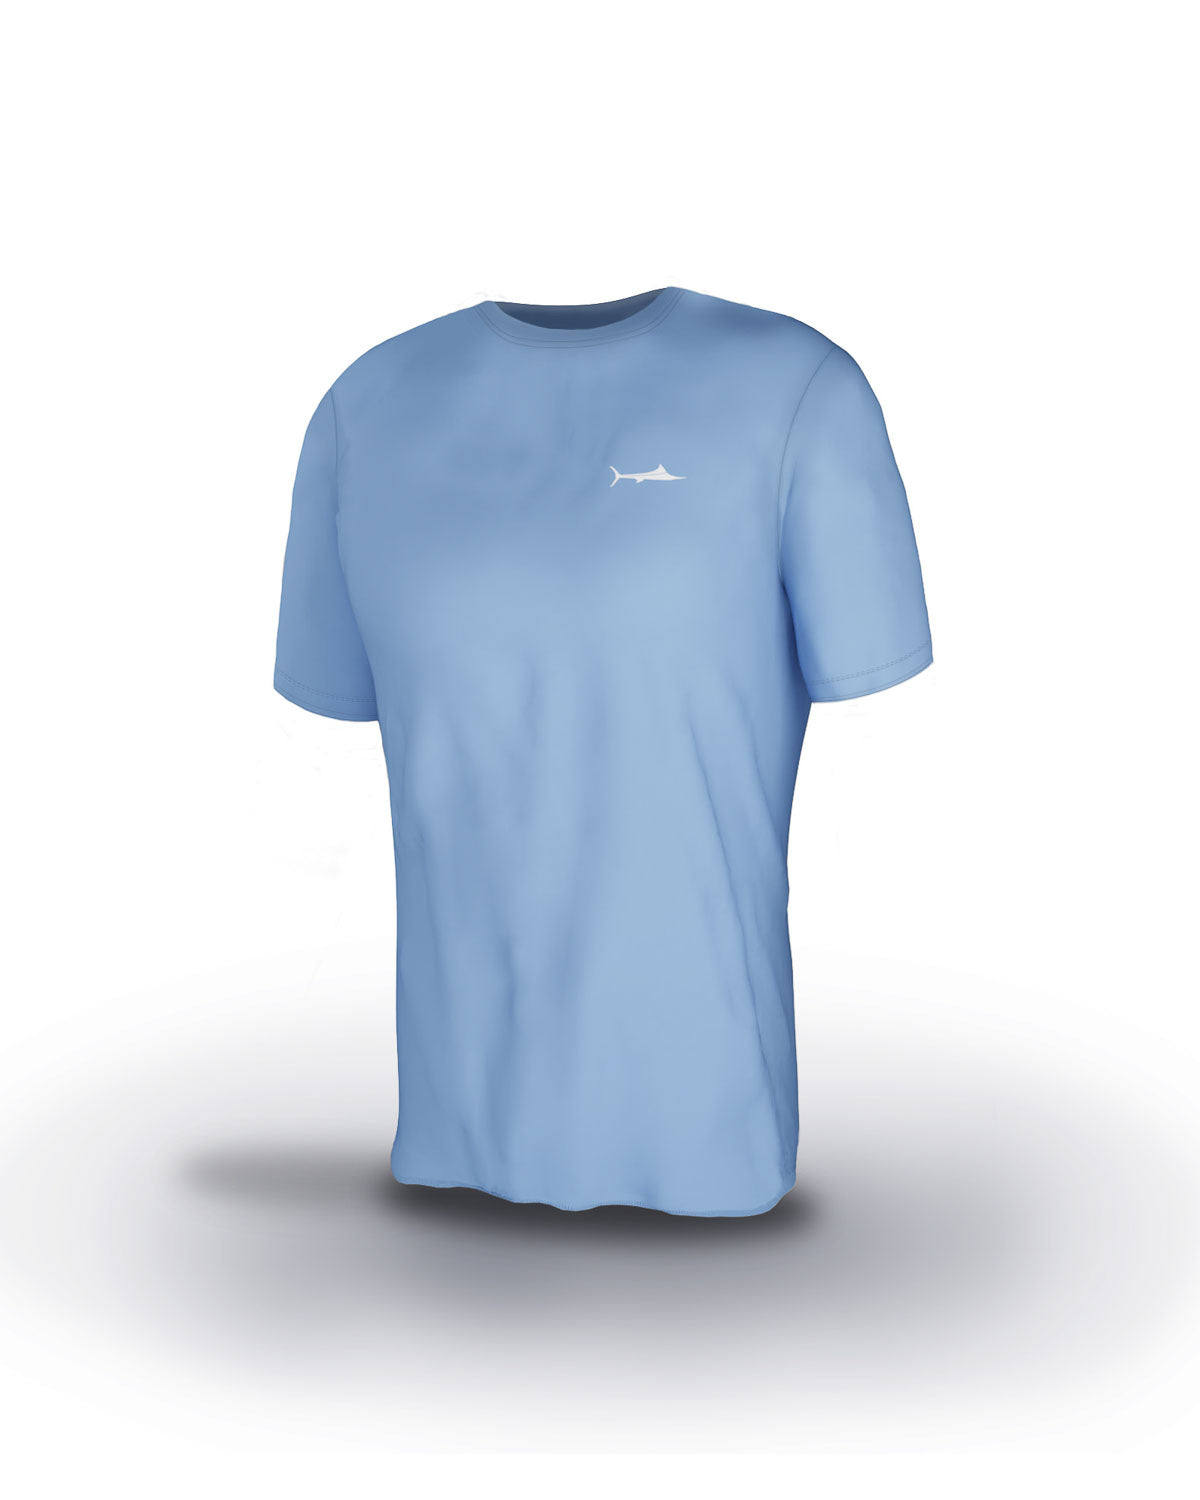 T-Shirts - The Lightest Shirts on the Market – Billfish Gear